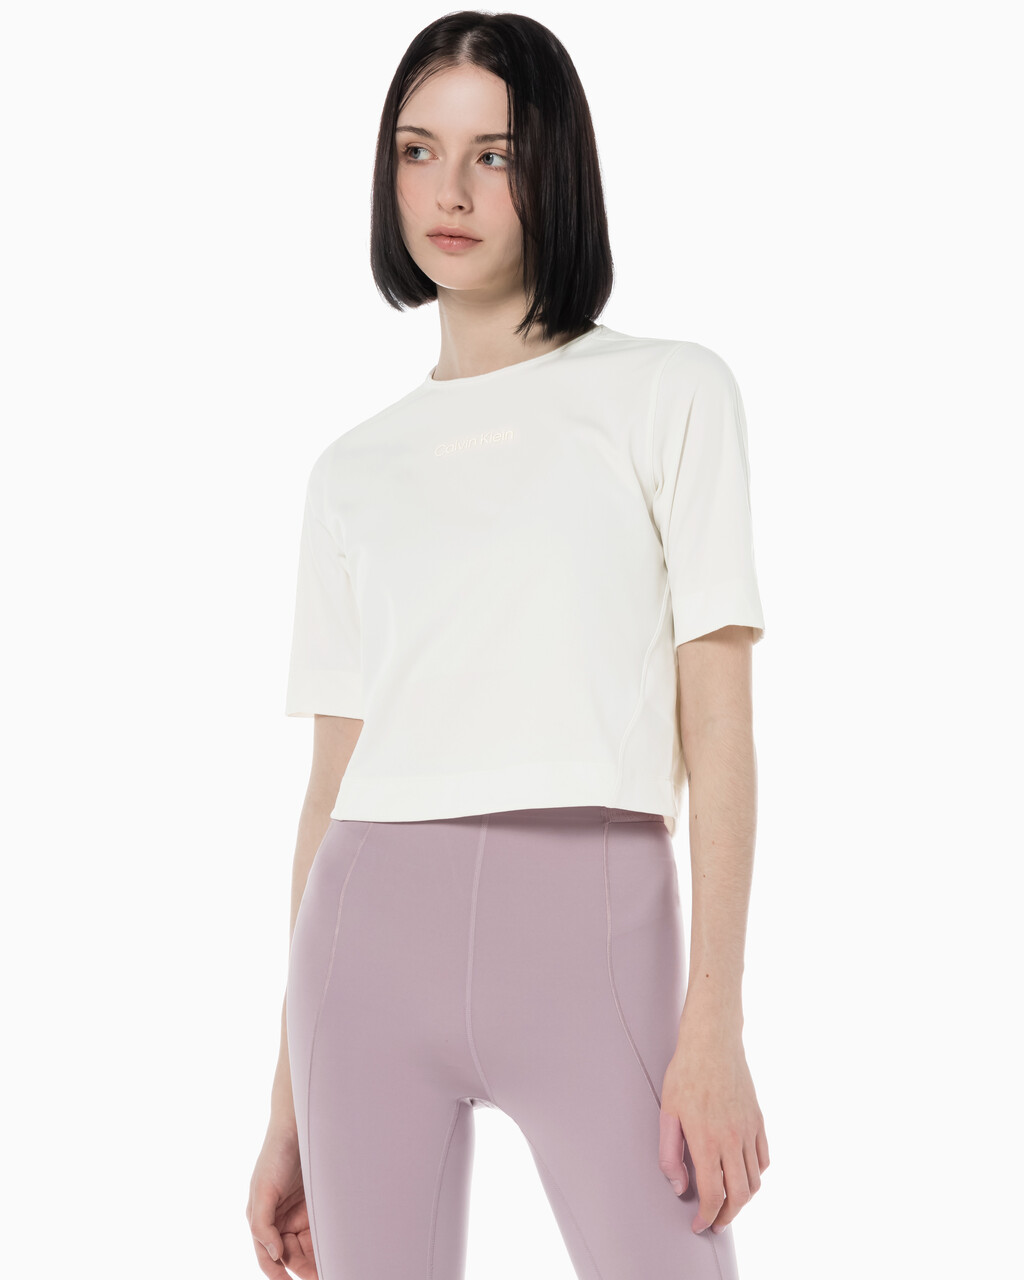 Buy 여성 박시 핏 에센셜 기능성 반팔 티셔츠 in color WHITE